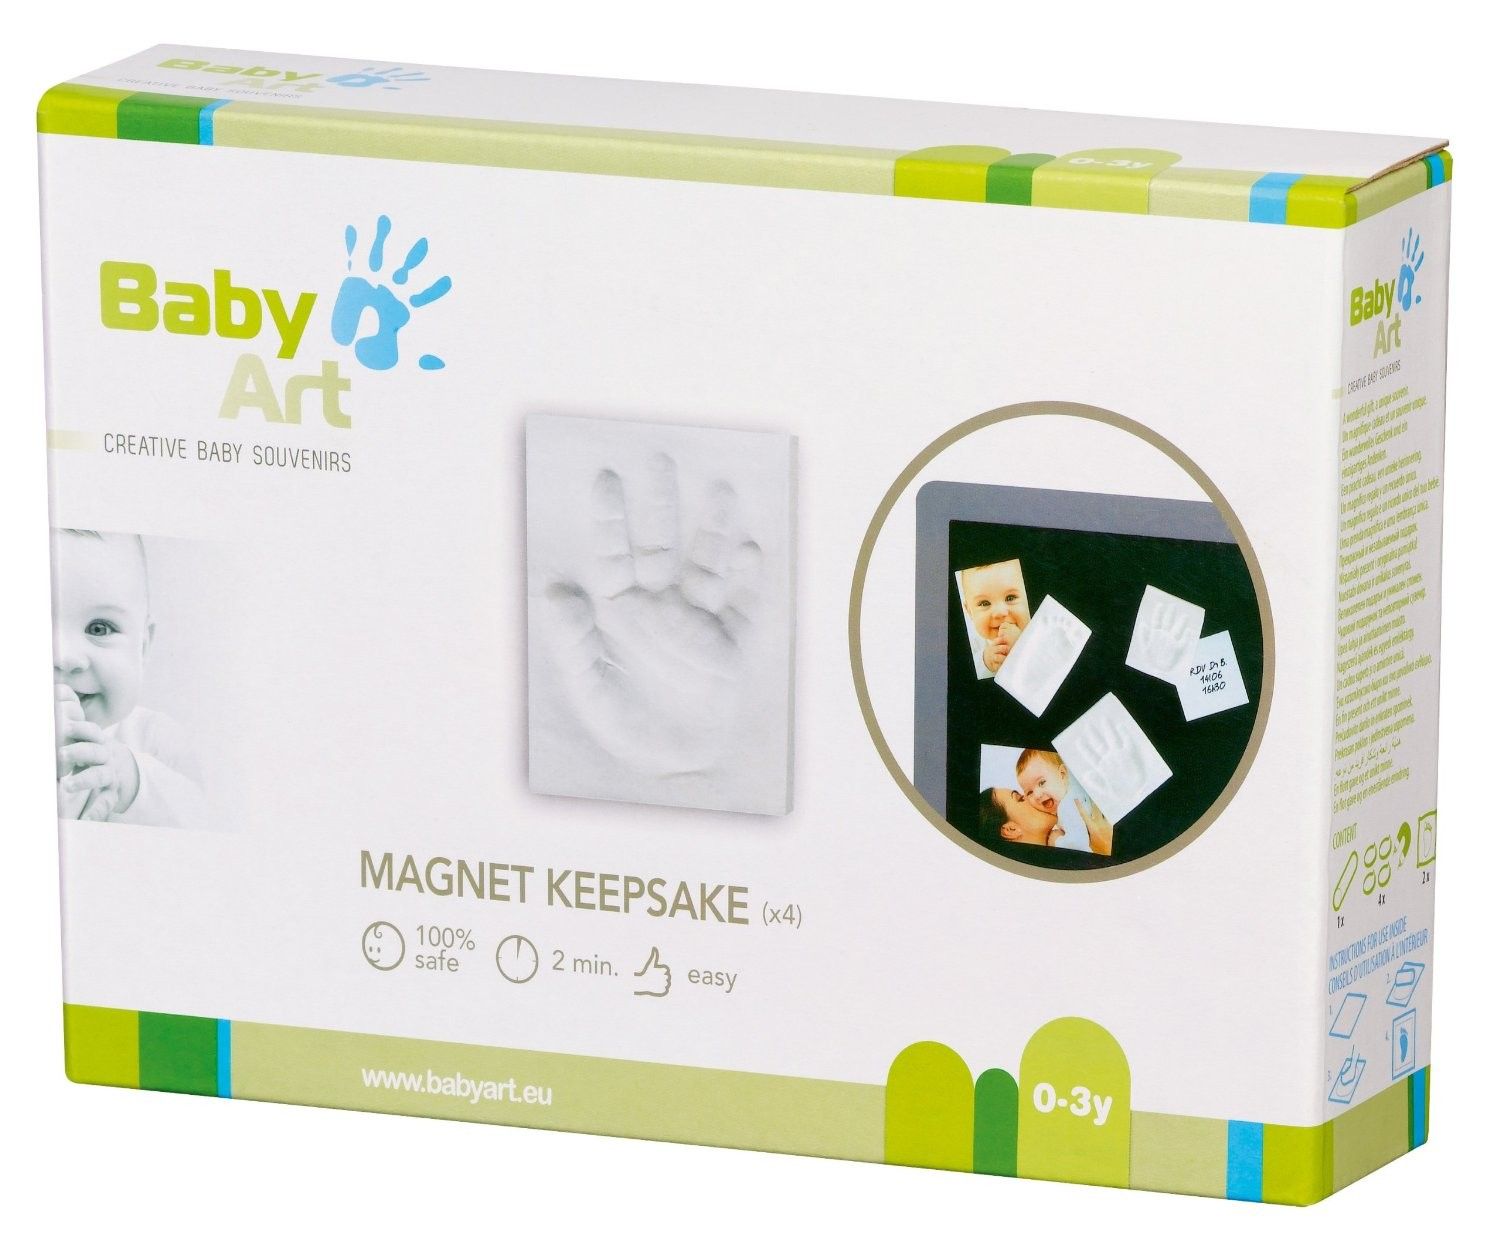 Baby Art Magnet Keepsake, Baby Gift